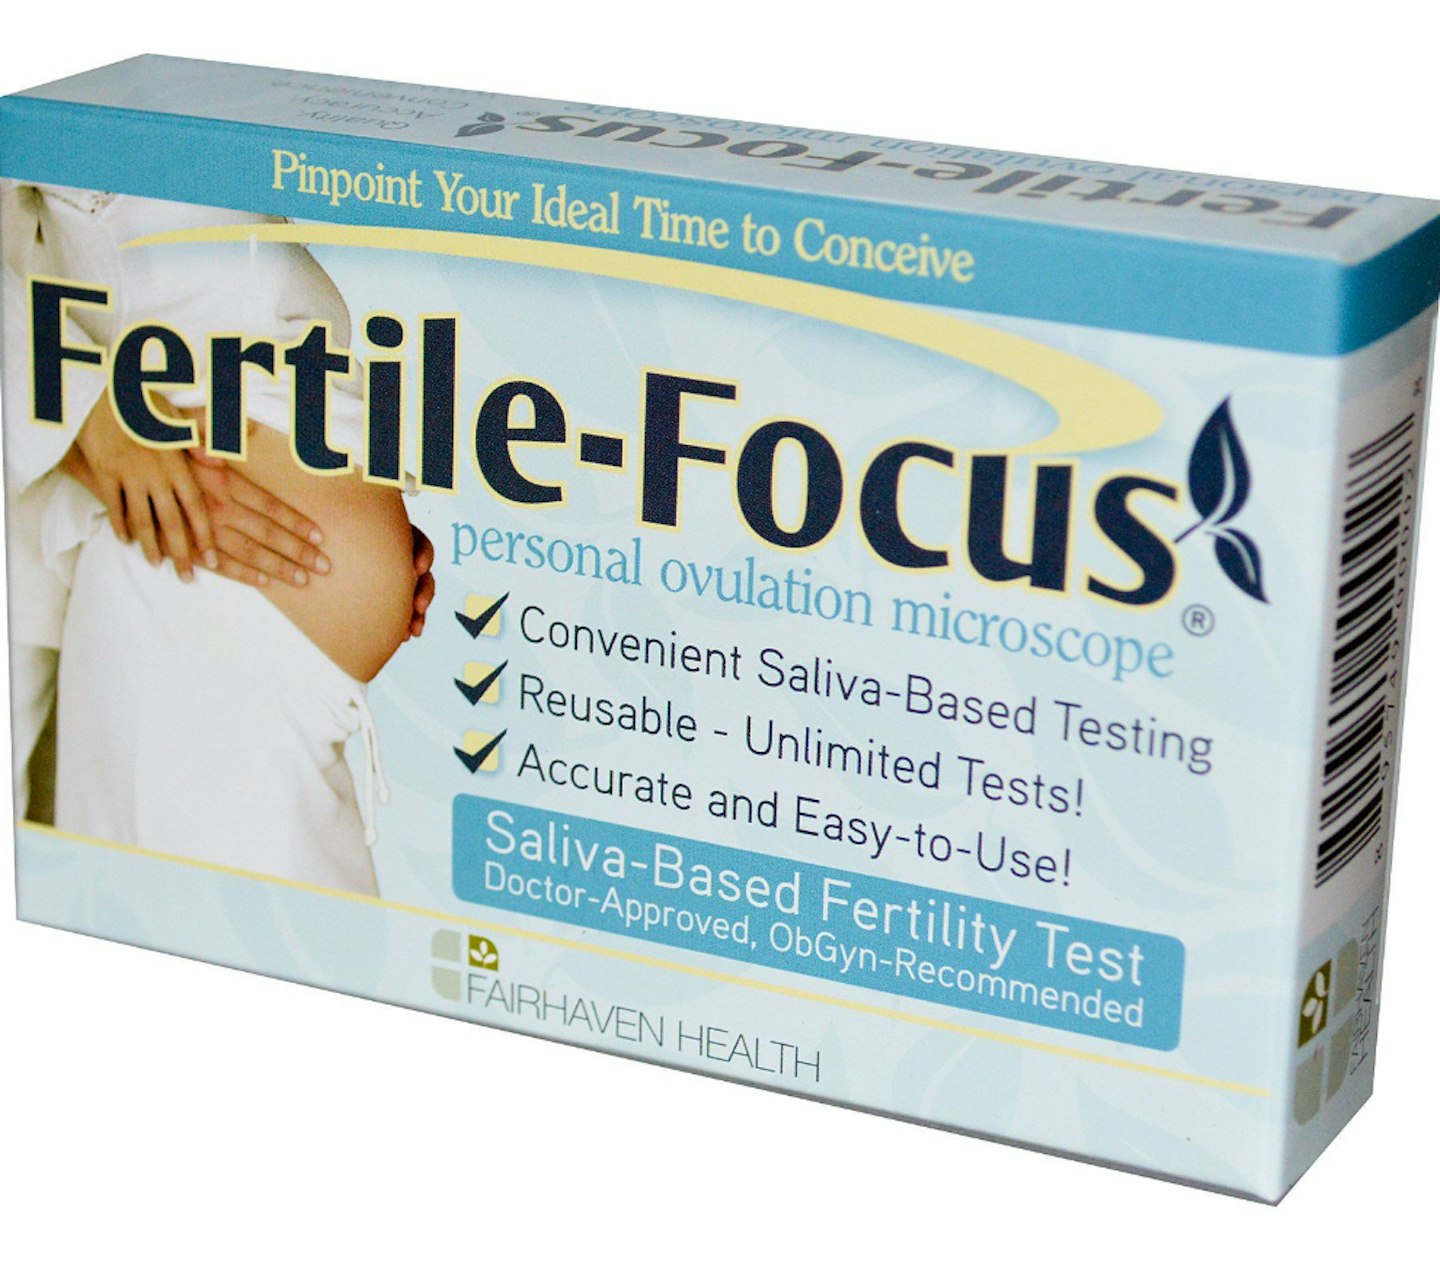 Fairhaven Health, Fertile-Focus, 1 Personal Ovulation Microscope, u00a322.56, iHerb